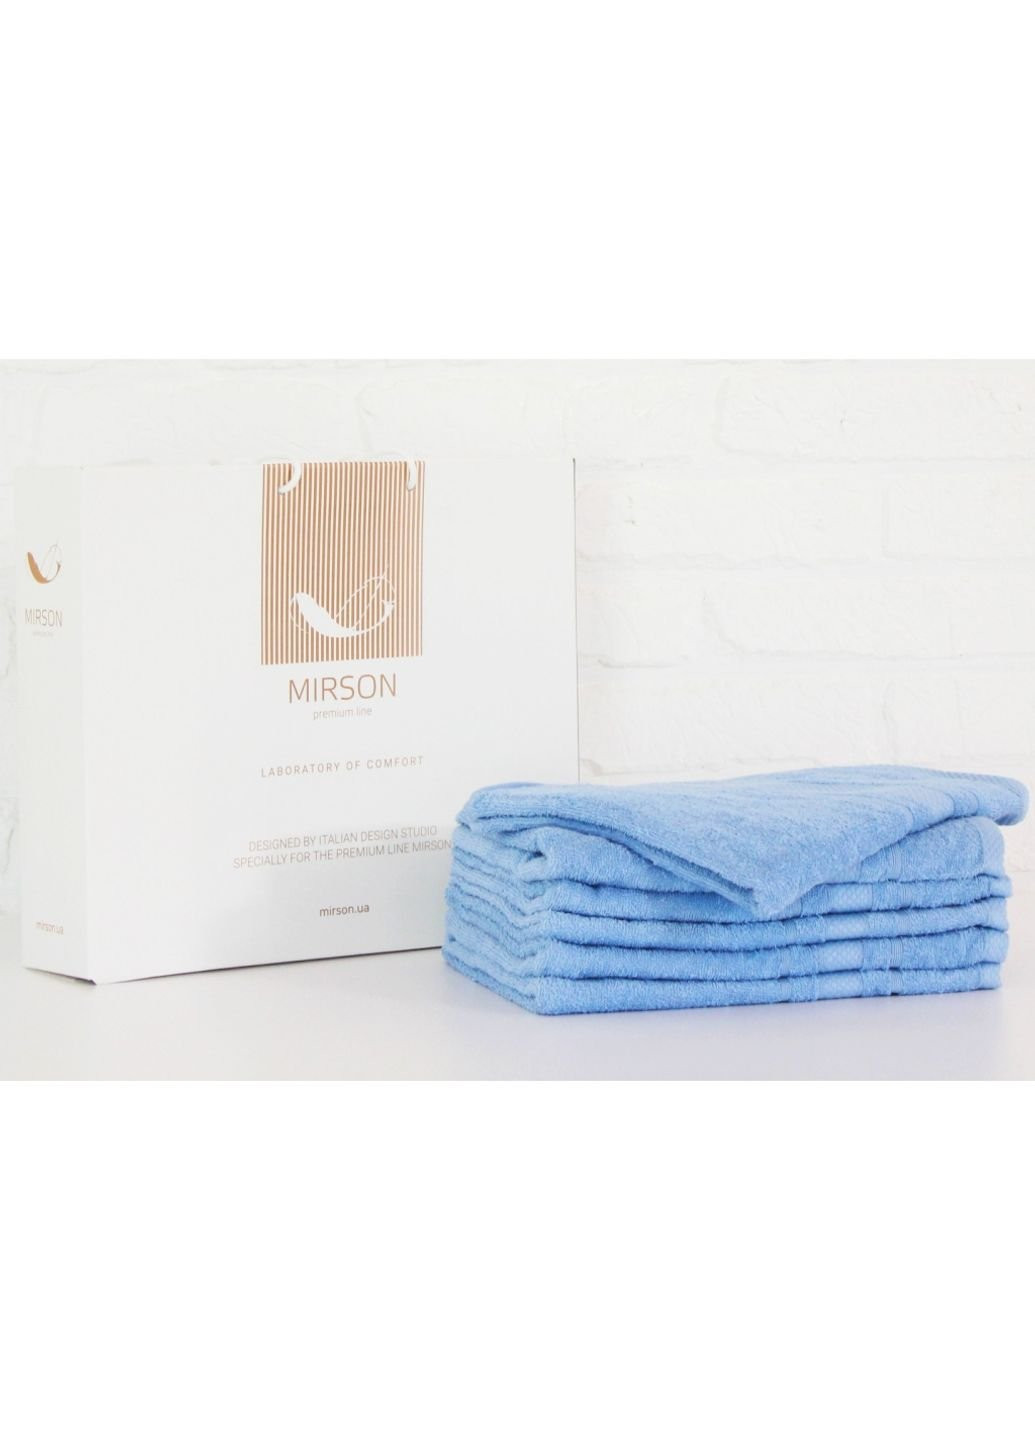 Mirson полотенце набор банных №5072 elite softness cornflower 70х140 6 шт (2200003524123) голубой производство - Украина